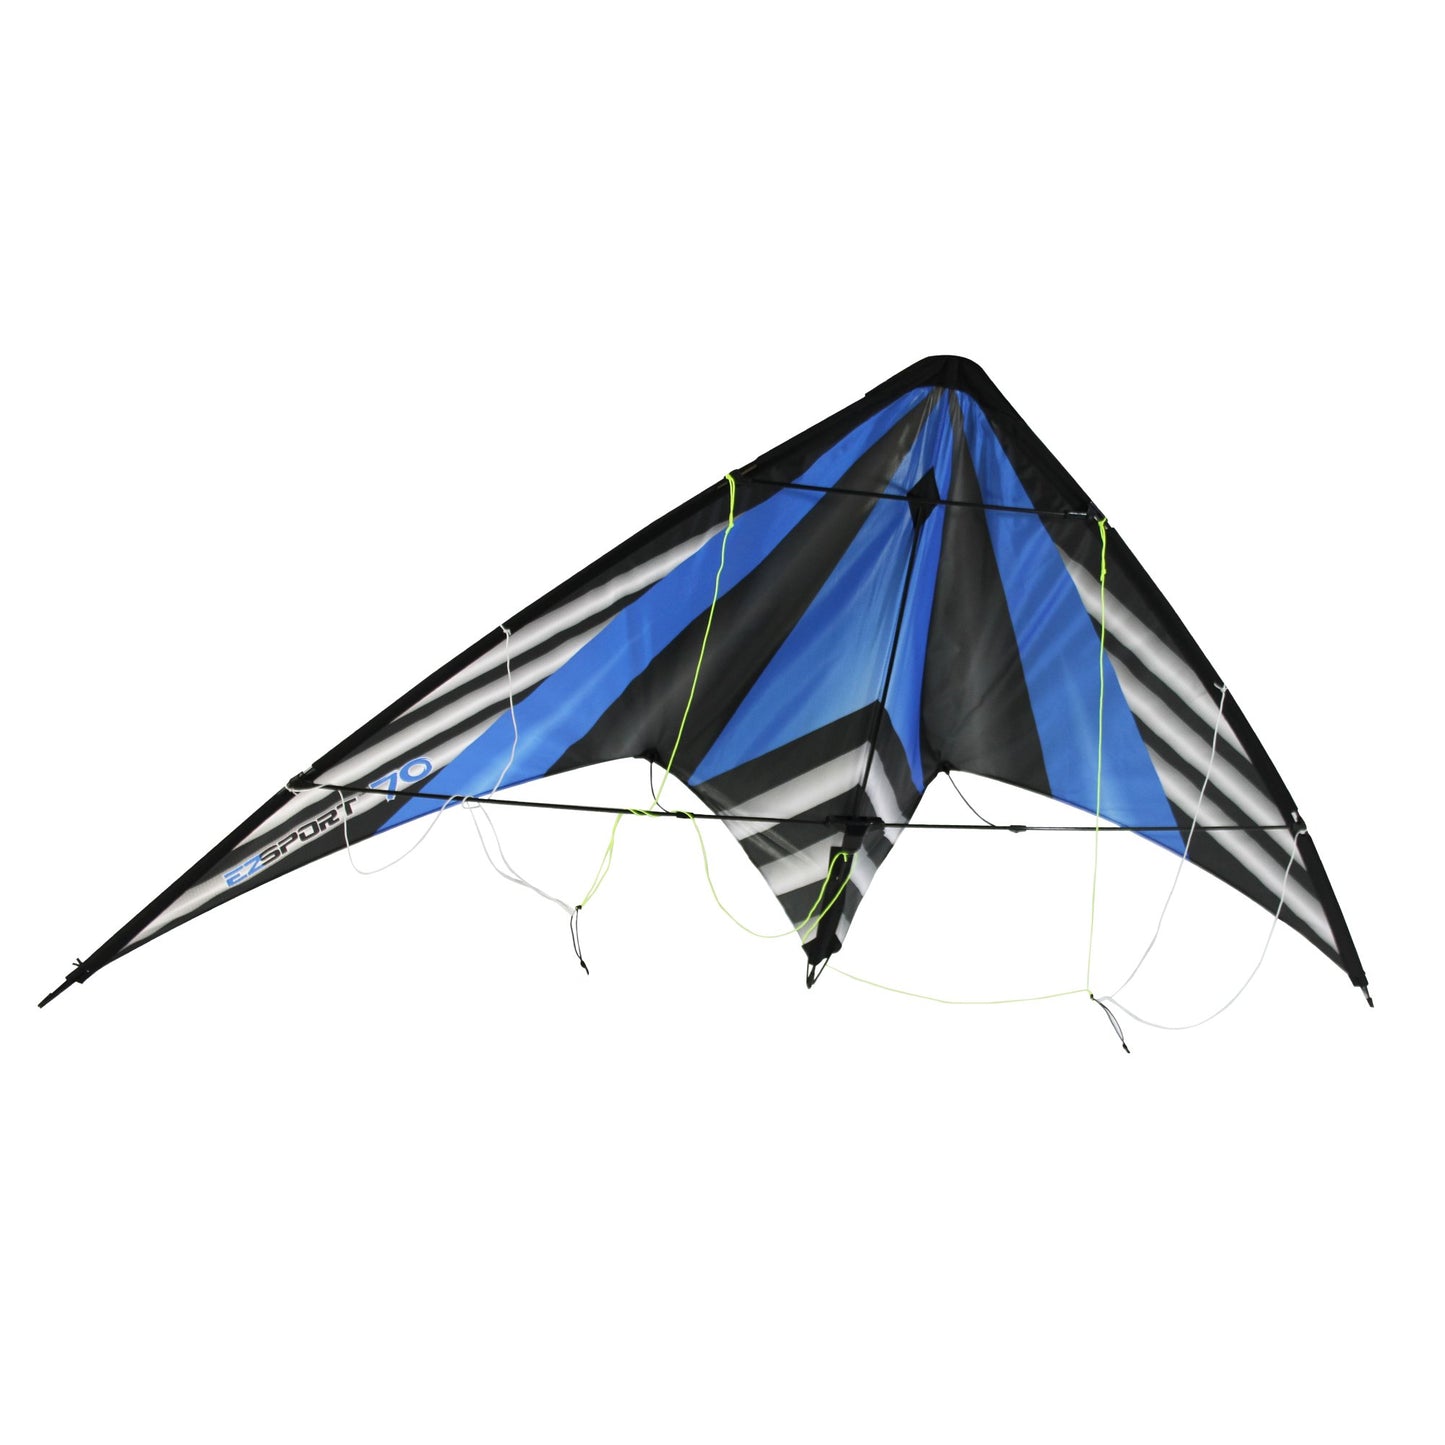 WindNSun EZ Sport 70 Dual Control Sport Kite Blue Stripe Nylon Kite Product Image